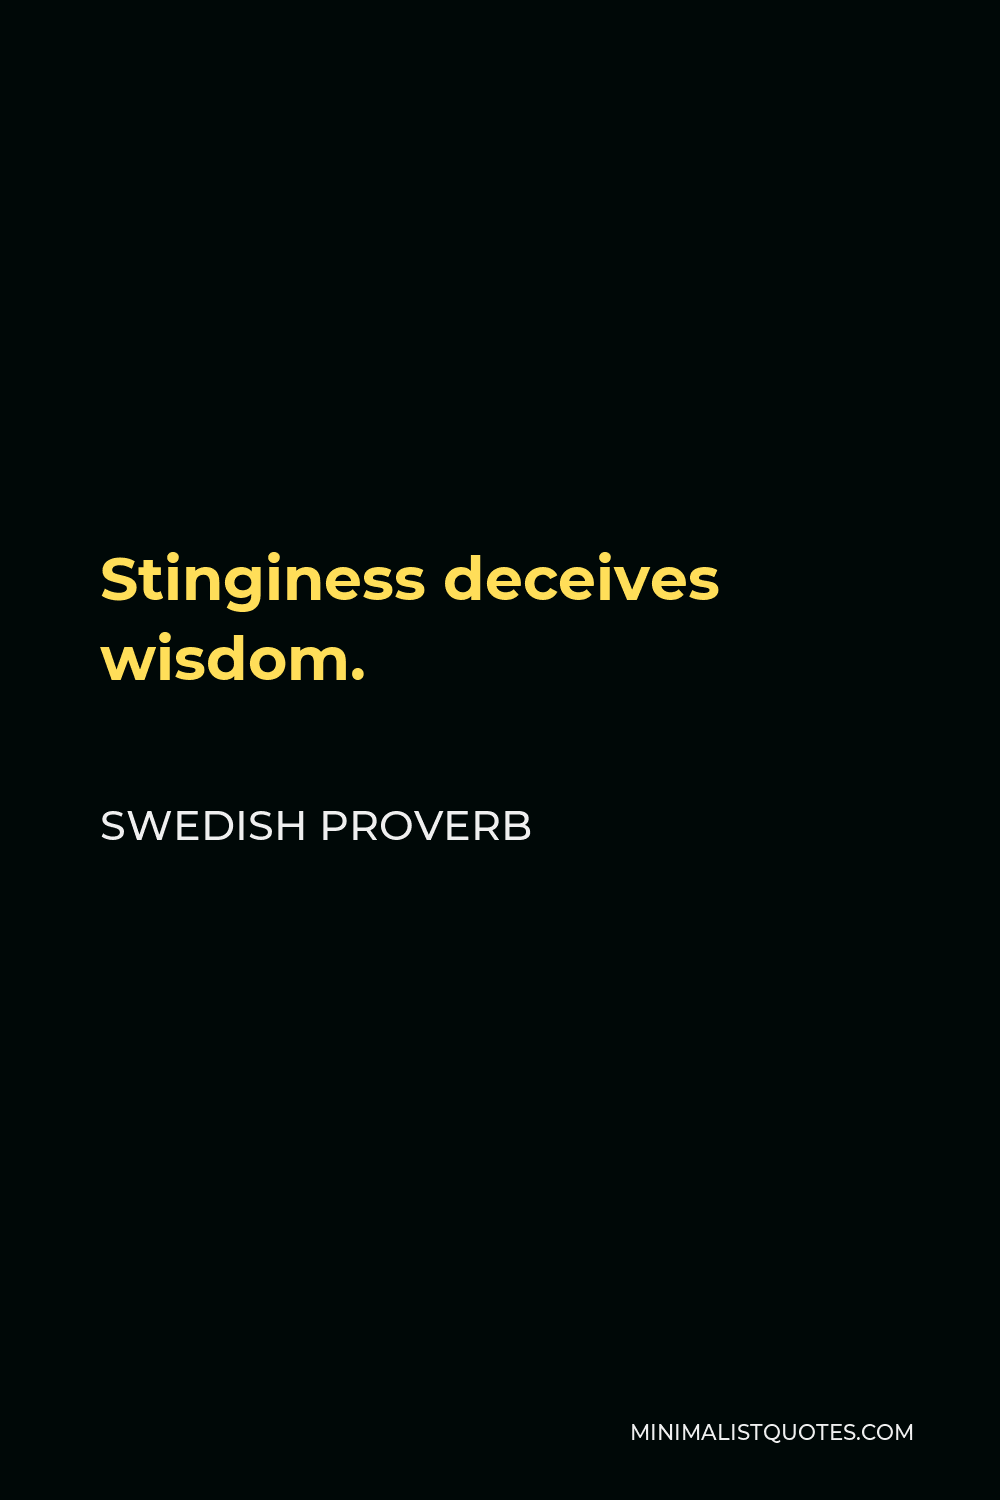 Swedish Proverb Quote - Stinginess deceives wisdom.